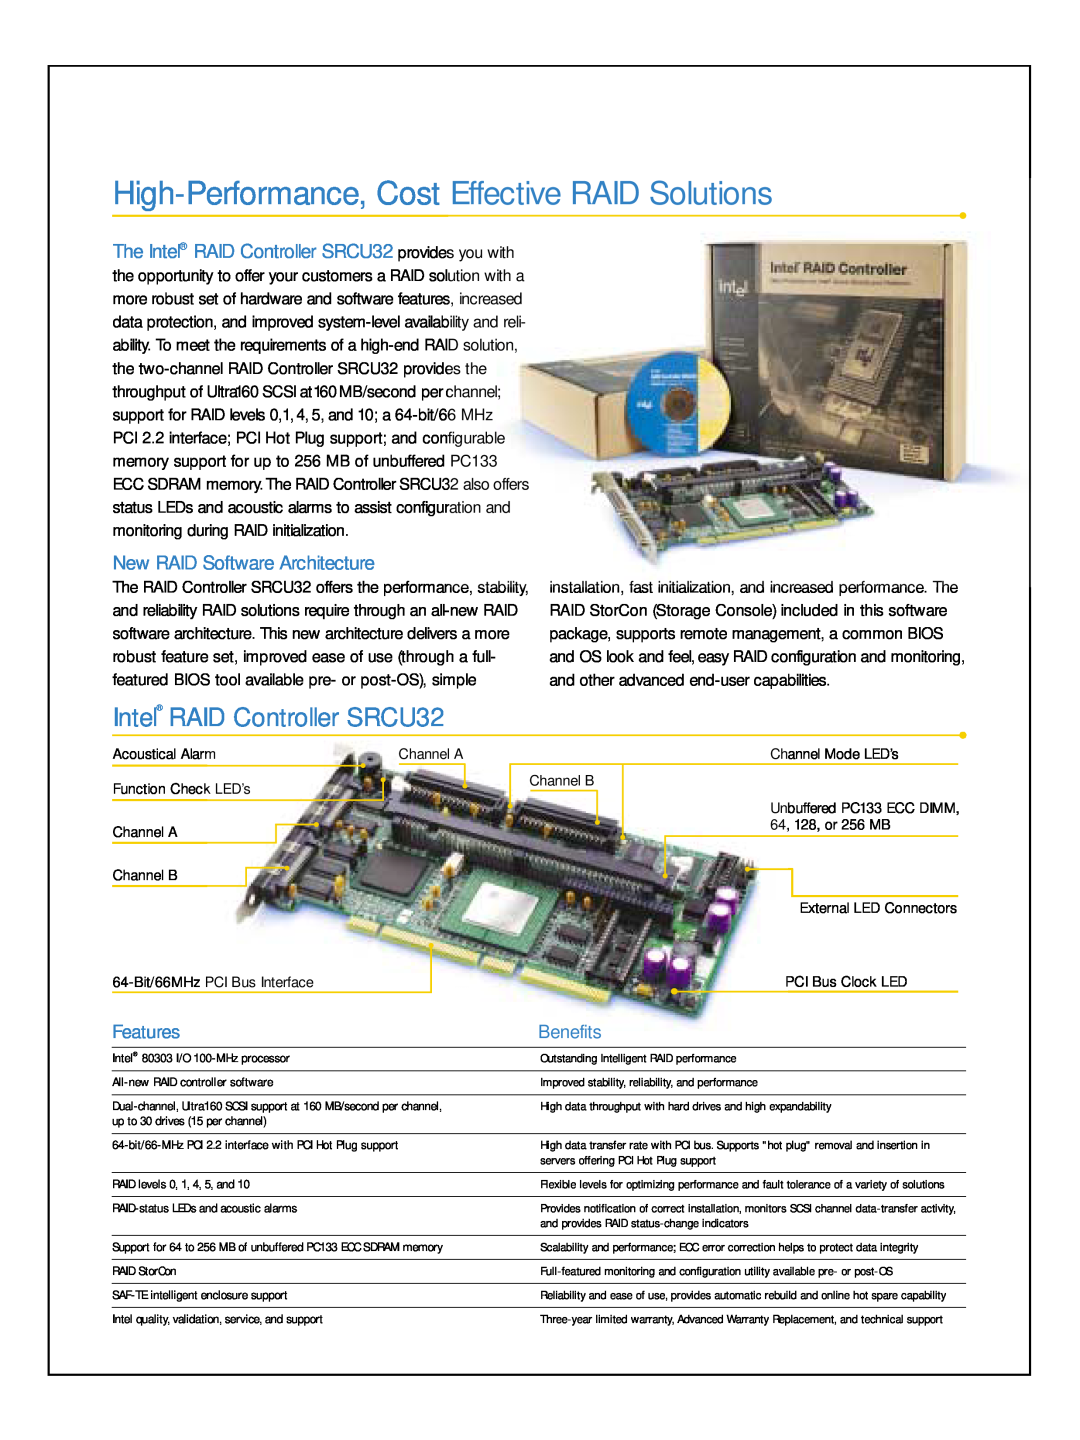 Intel High-Performance,Cost Effective RAID Solutions, Intel RAID Controller SRCU32, New RAID Software Architecture 